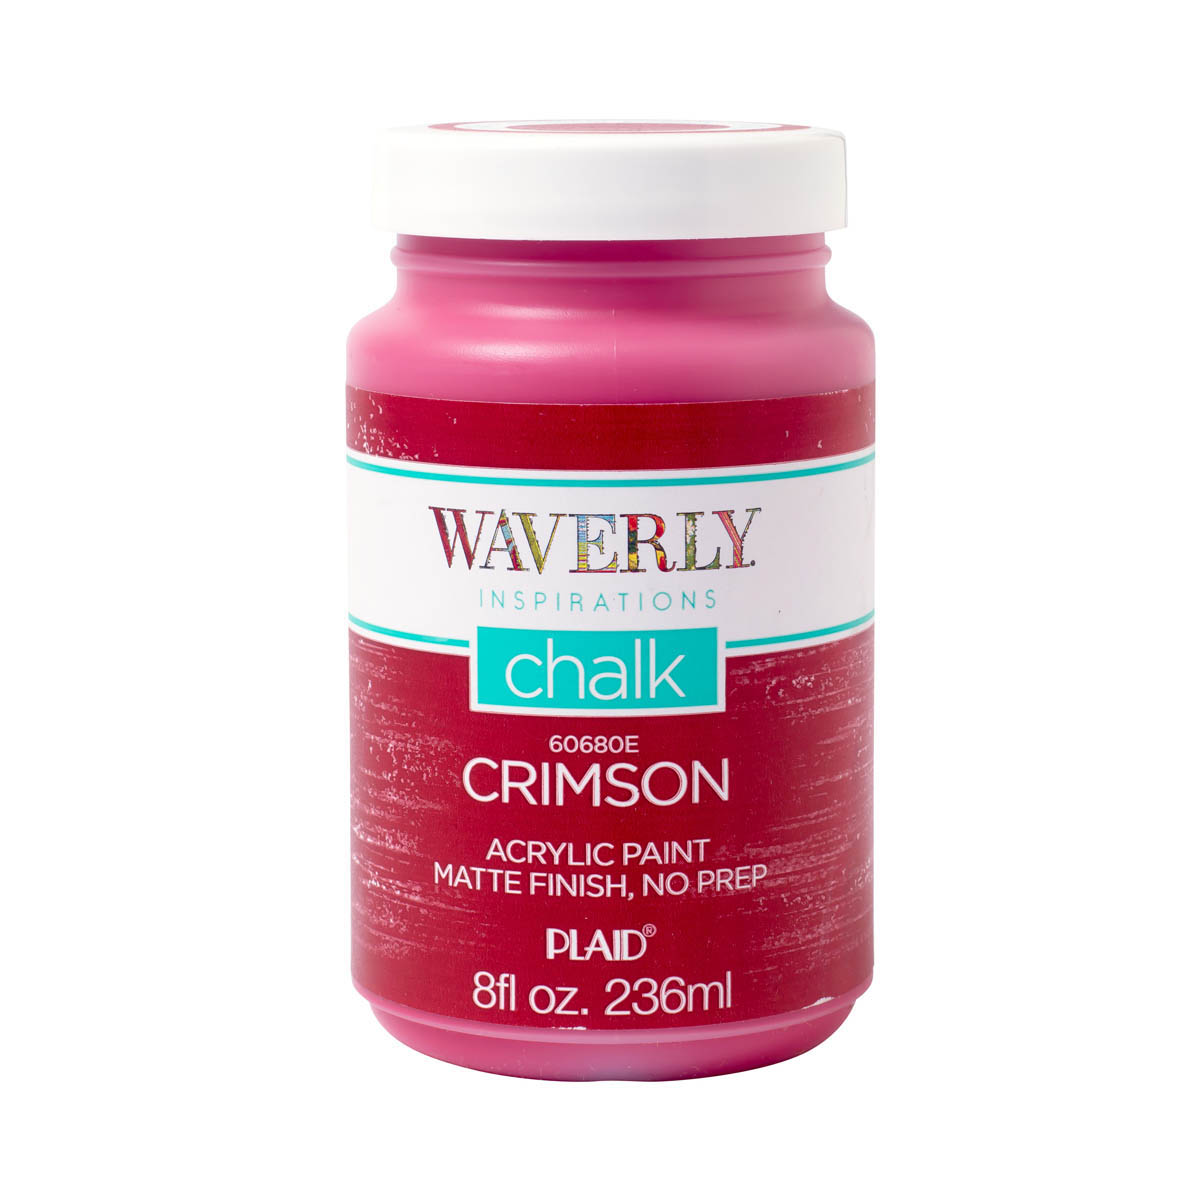 Waverly ® Inspirations Chalk Acrylic Paint - Crimson, 8 oz. - 60680E